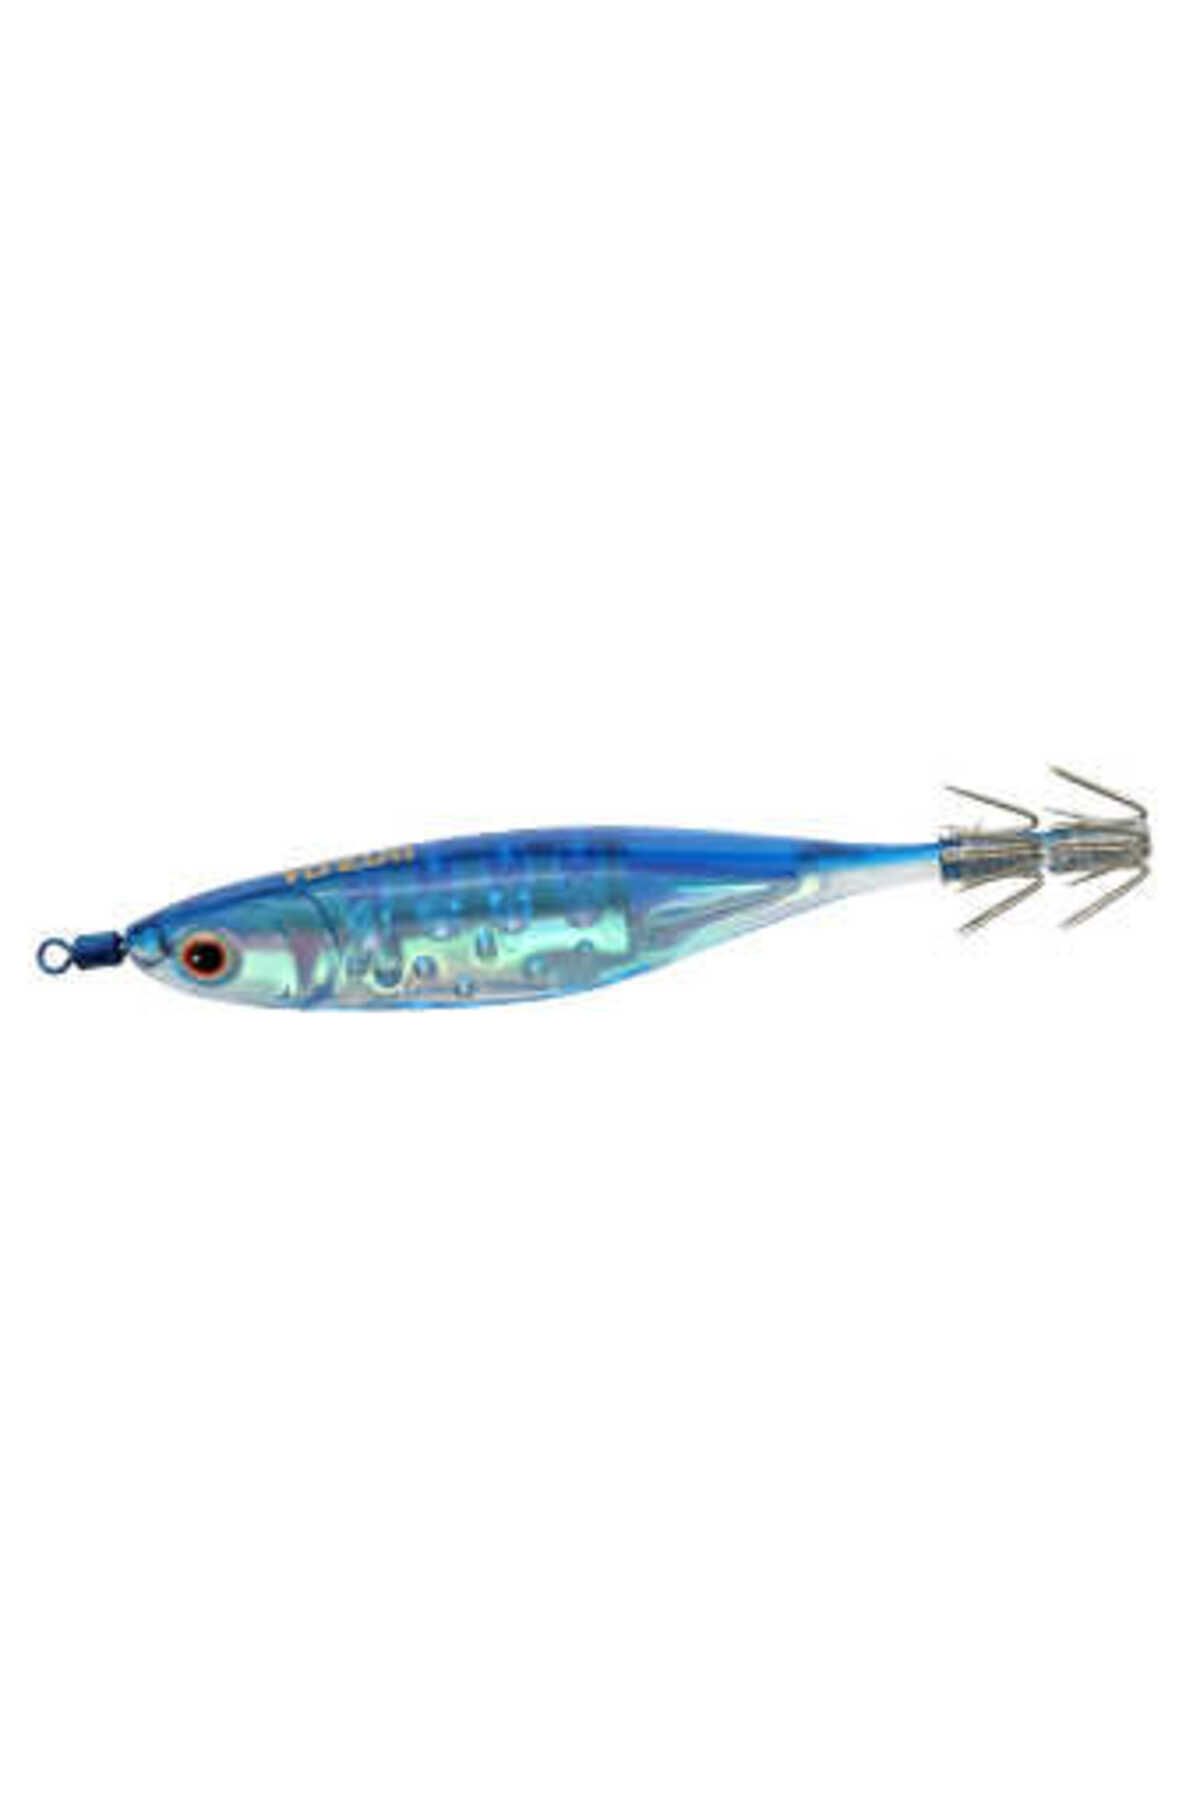 yo-zuri Yozuri Crystal Ultra Auora Kalamar Sâhte Balığı Iw A1547-80mm